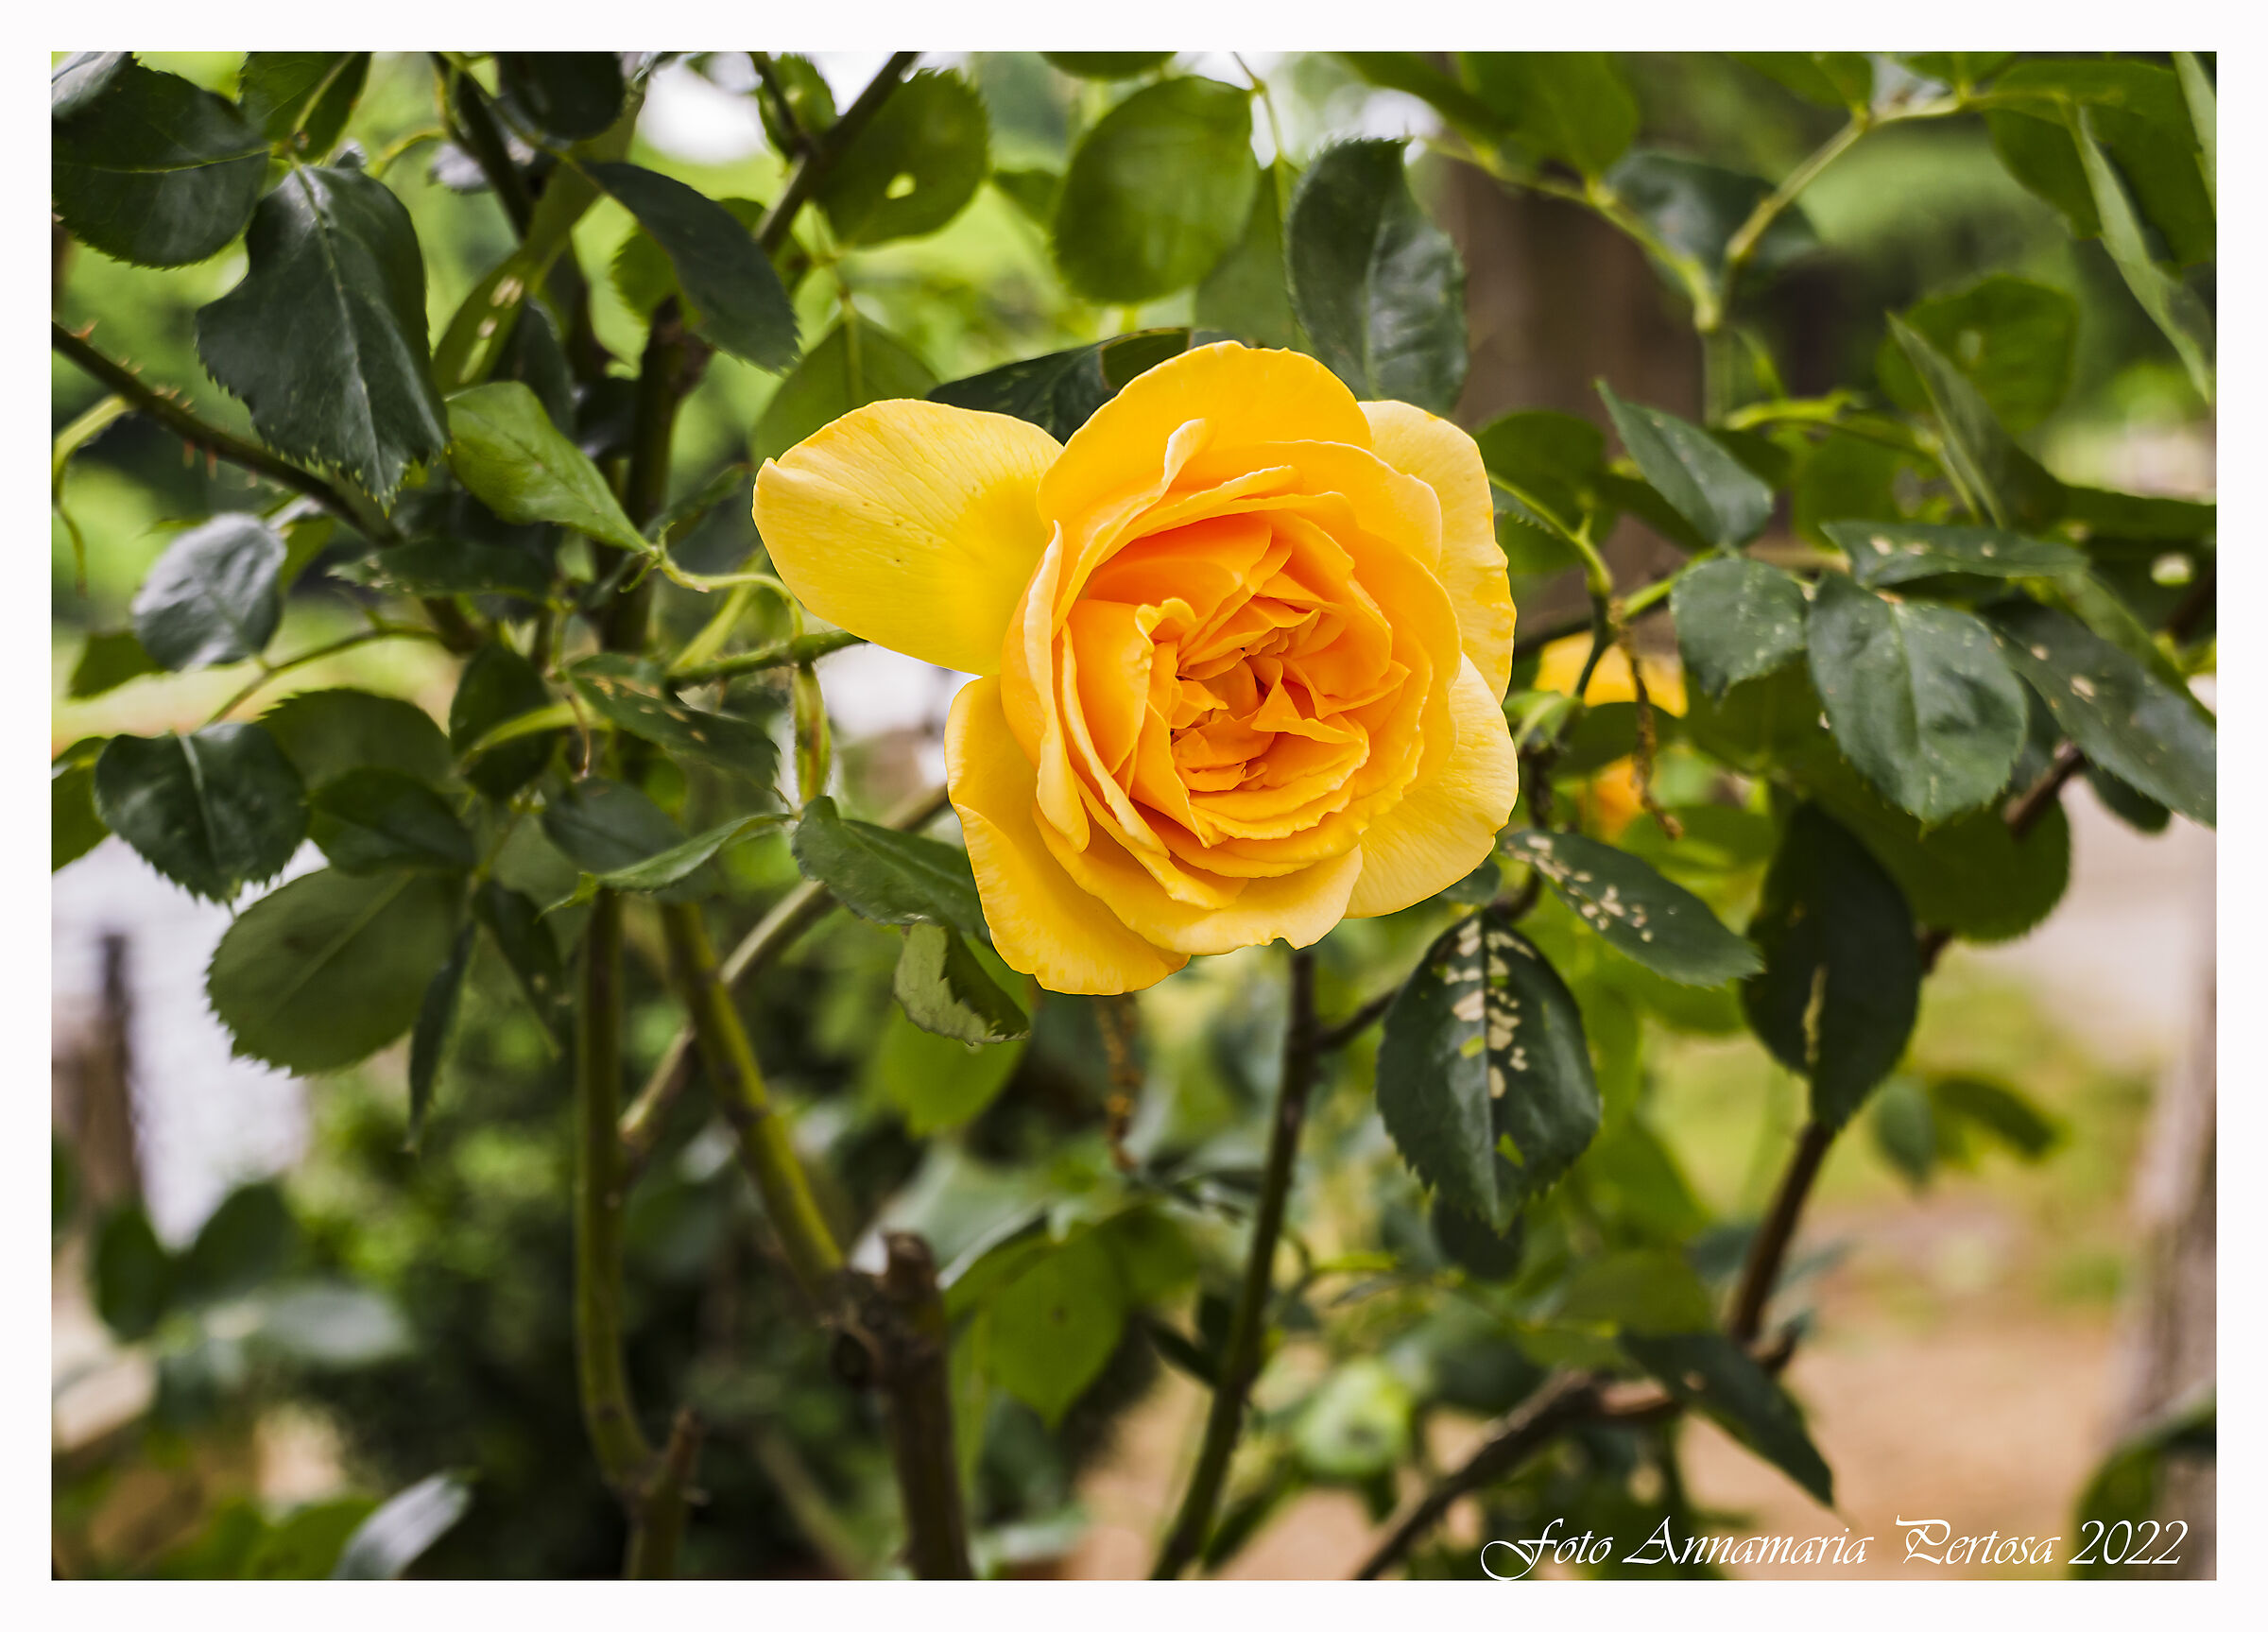 Orange rose scent of joy and vitality...